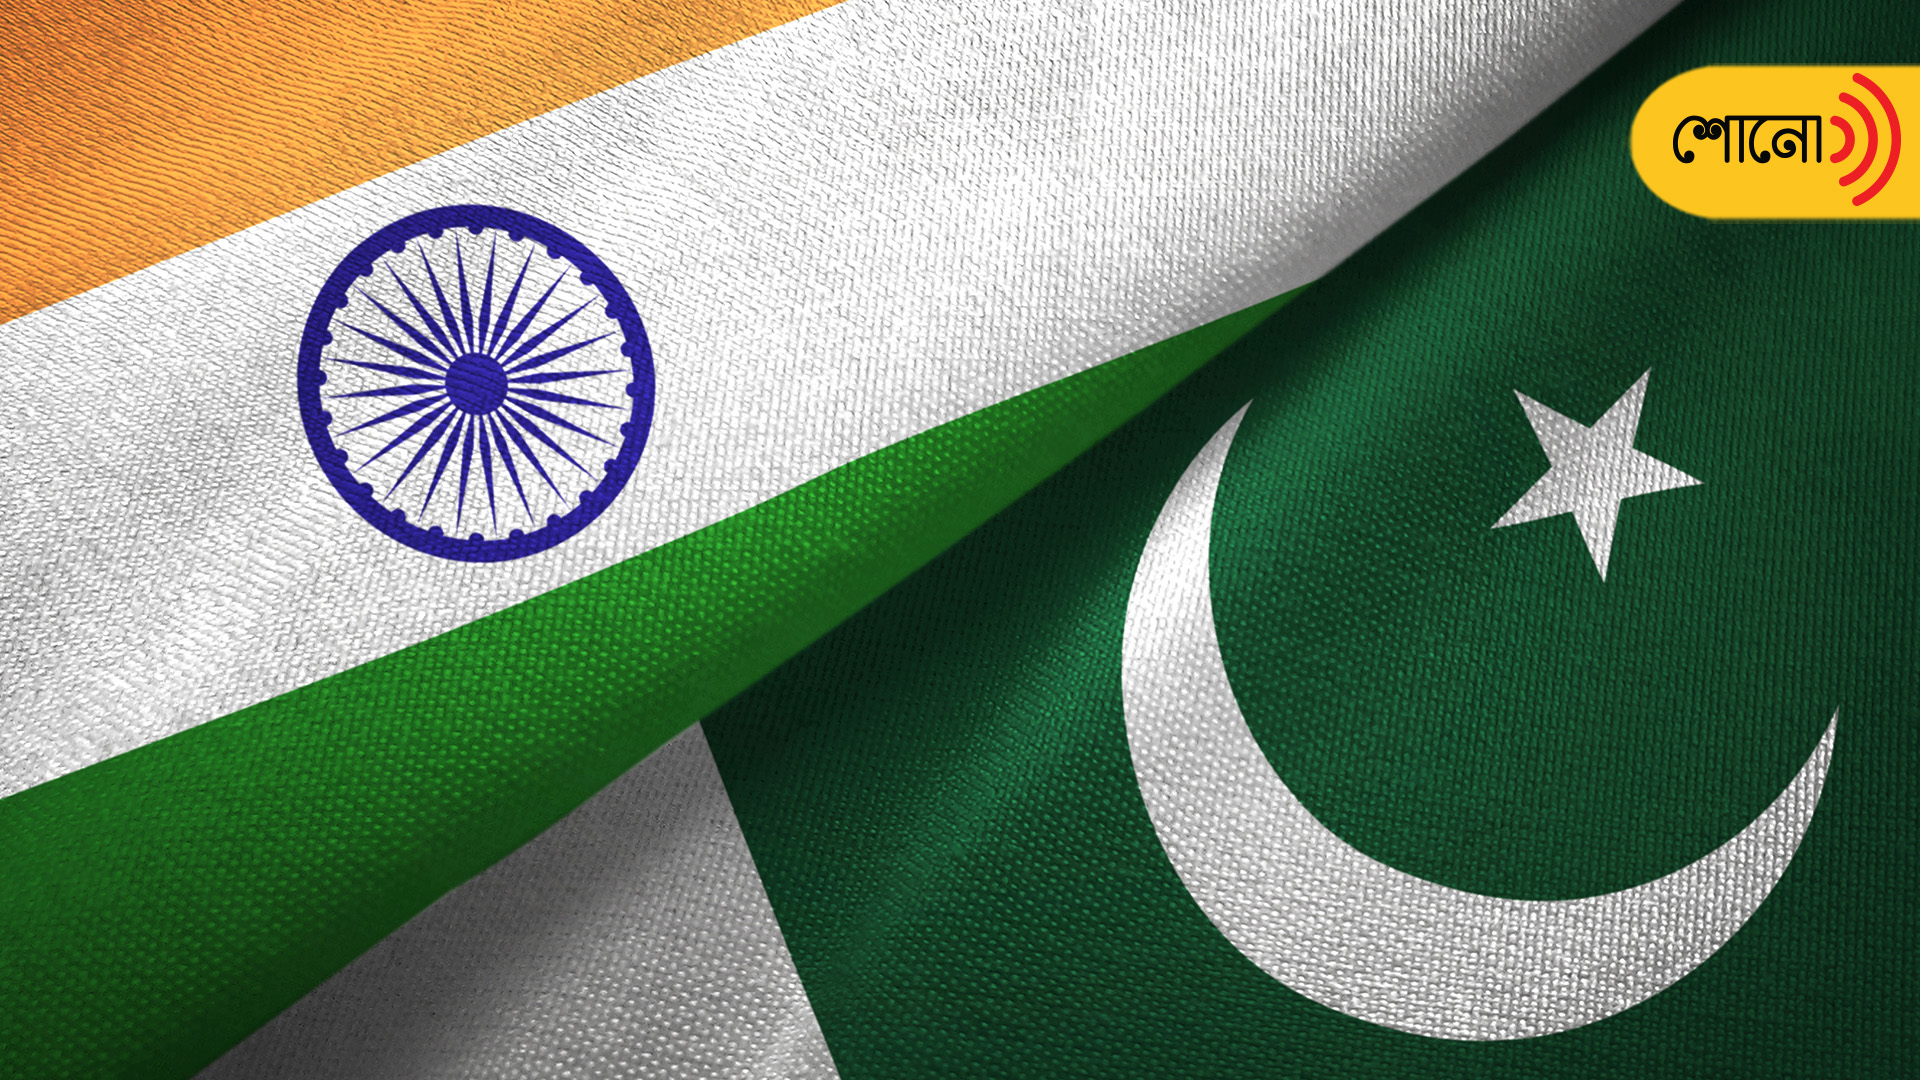 Pakistan may lay claim on name 'India' if Modi govt derecognizes it, claims Pak media